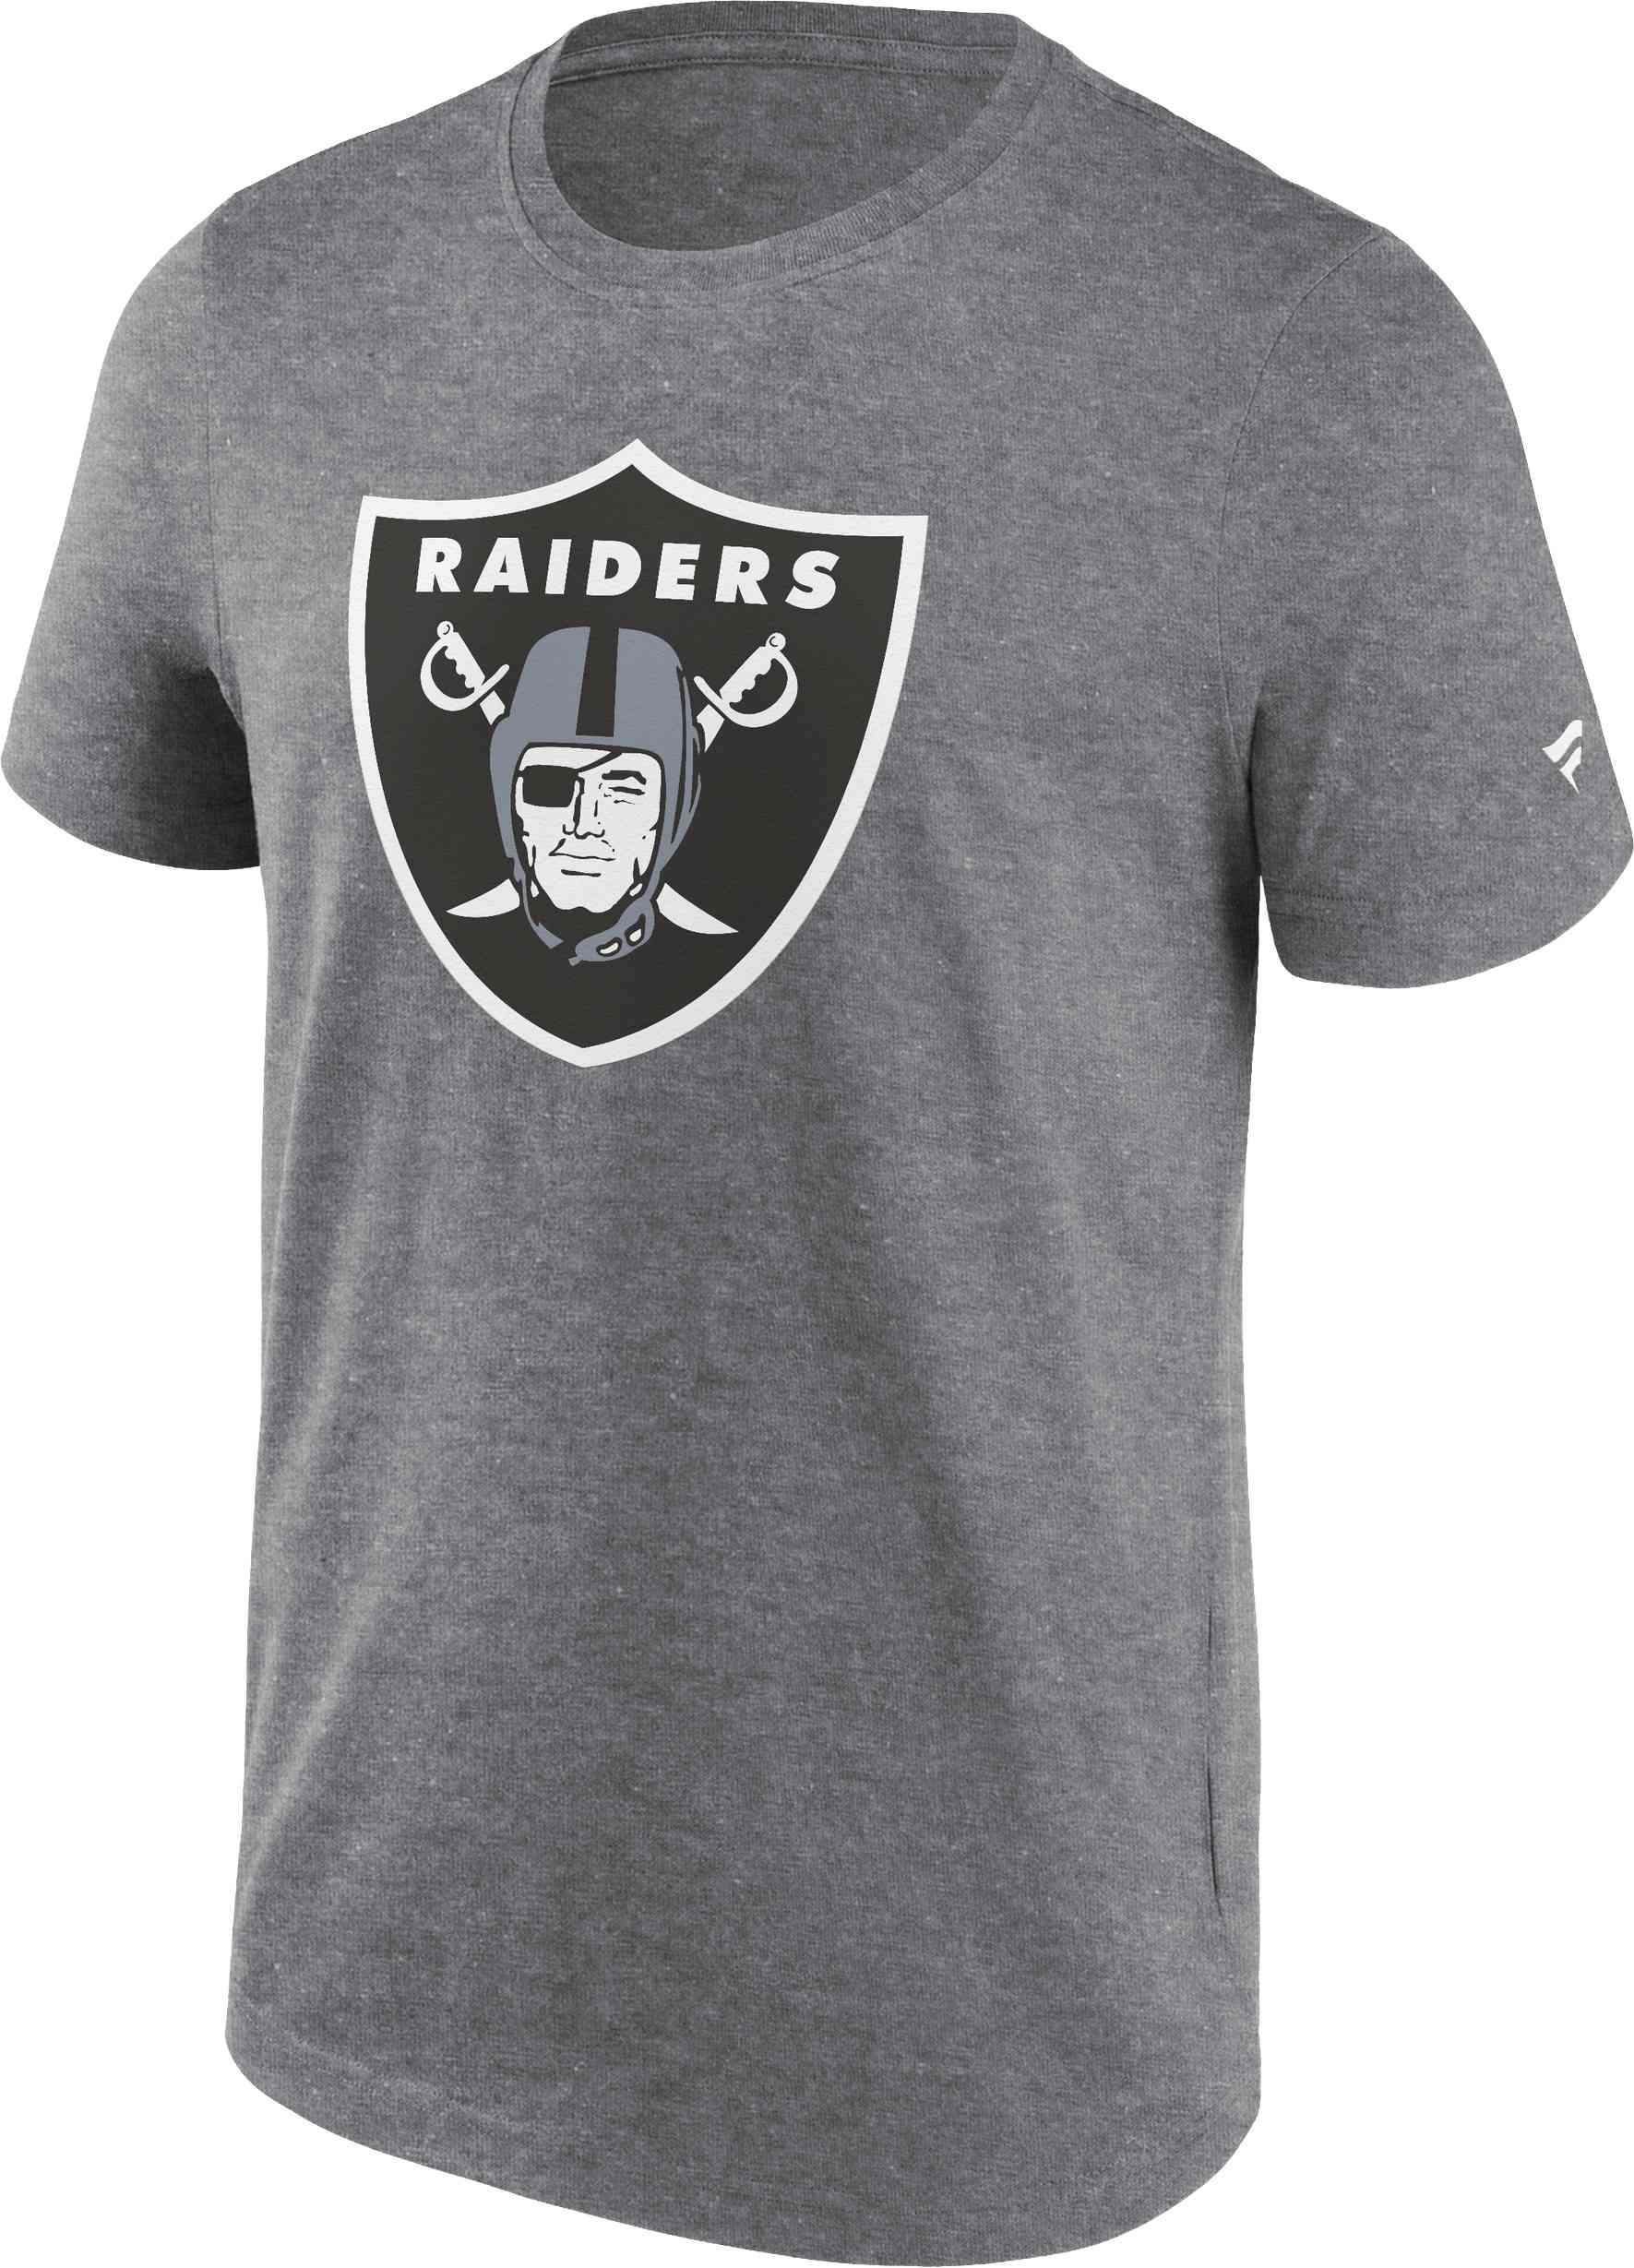 Fanatics - NFL Las Vegas Raiders Primary Logo Graphic T-Shirt